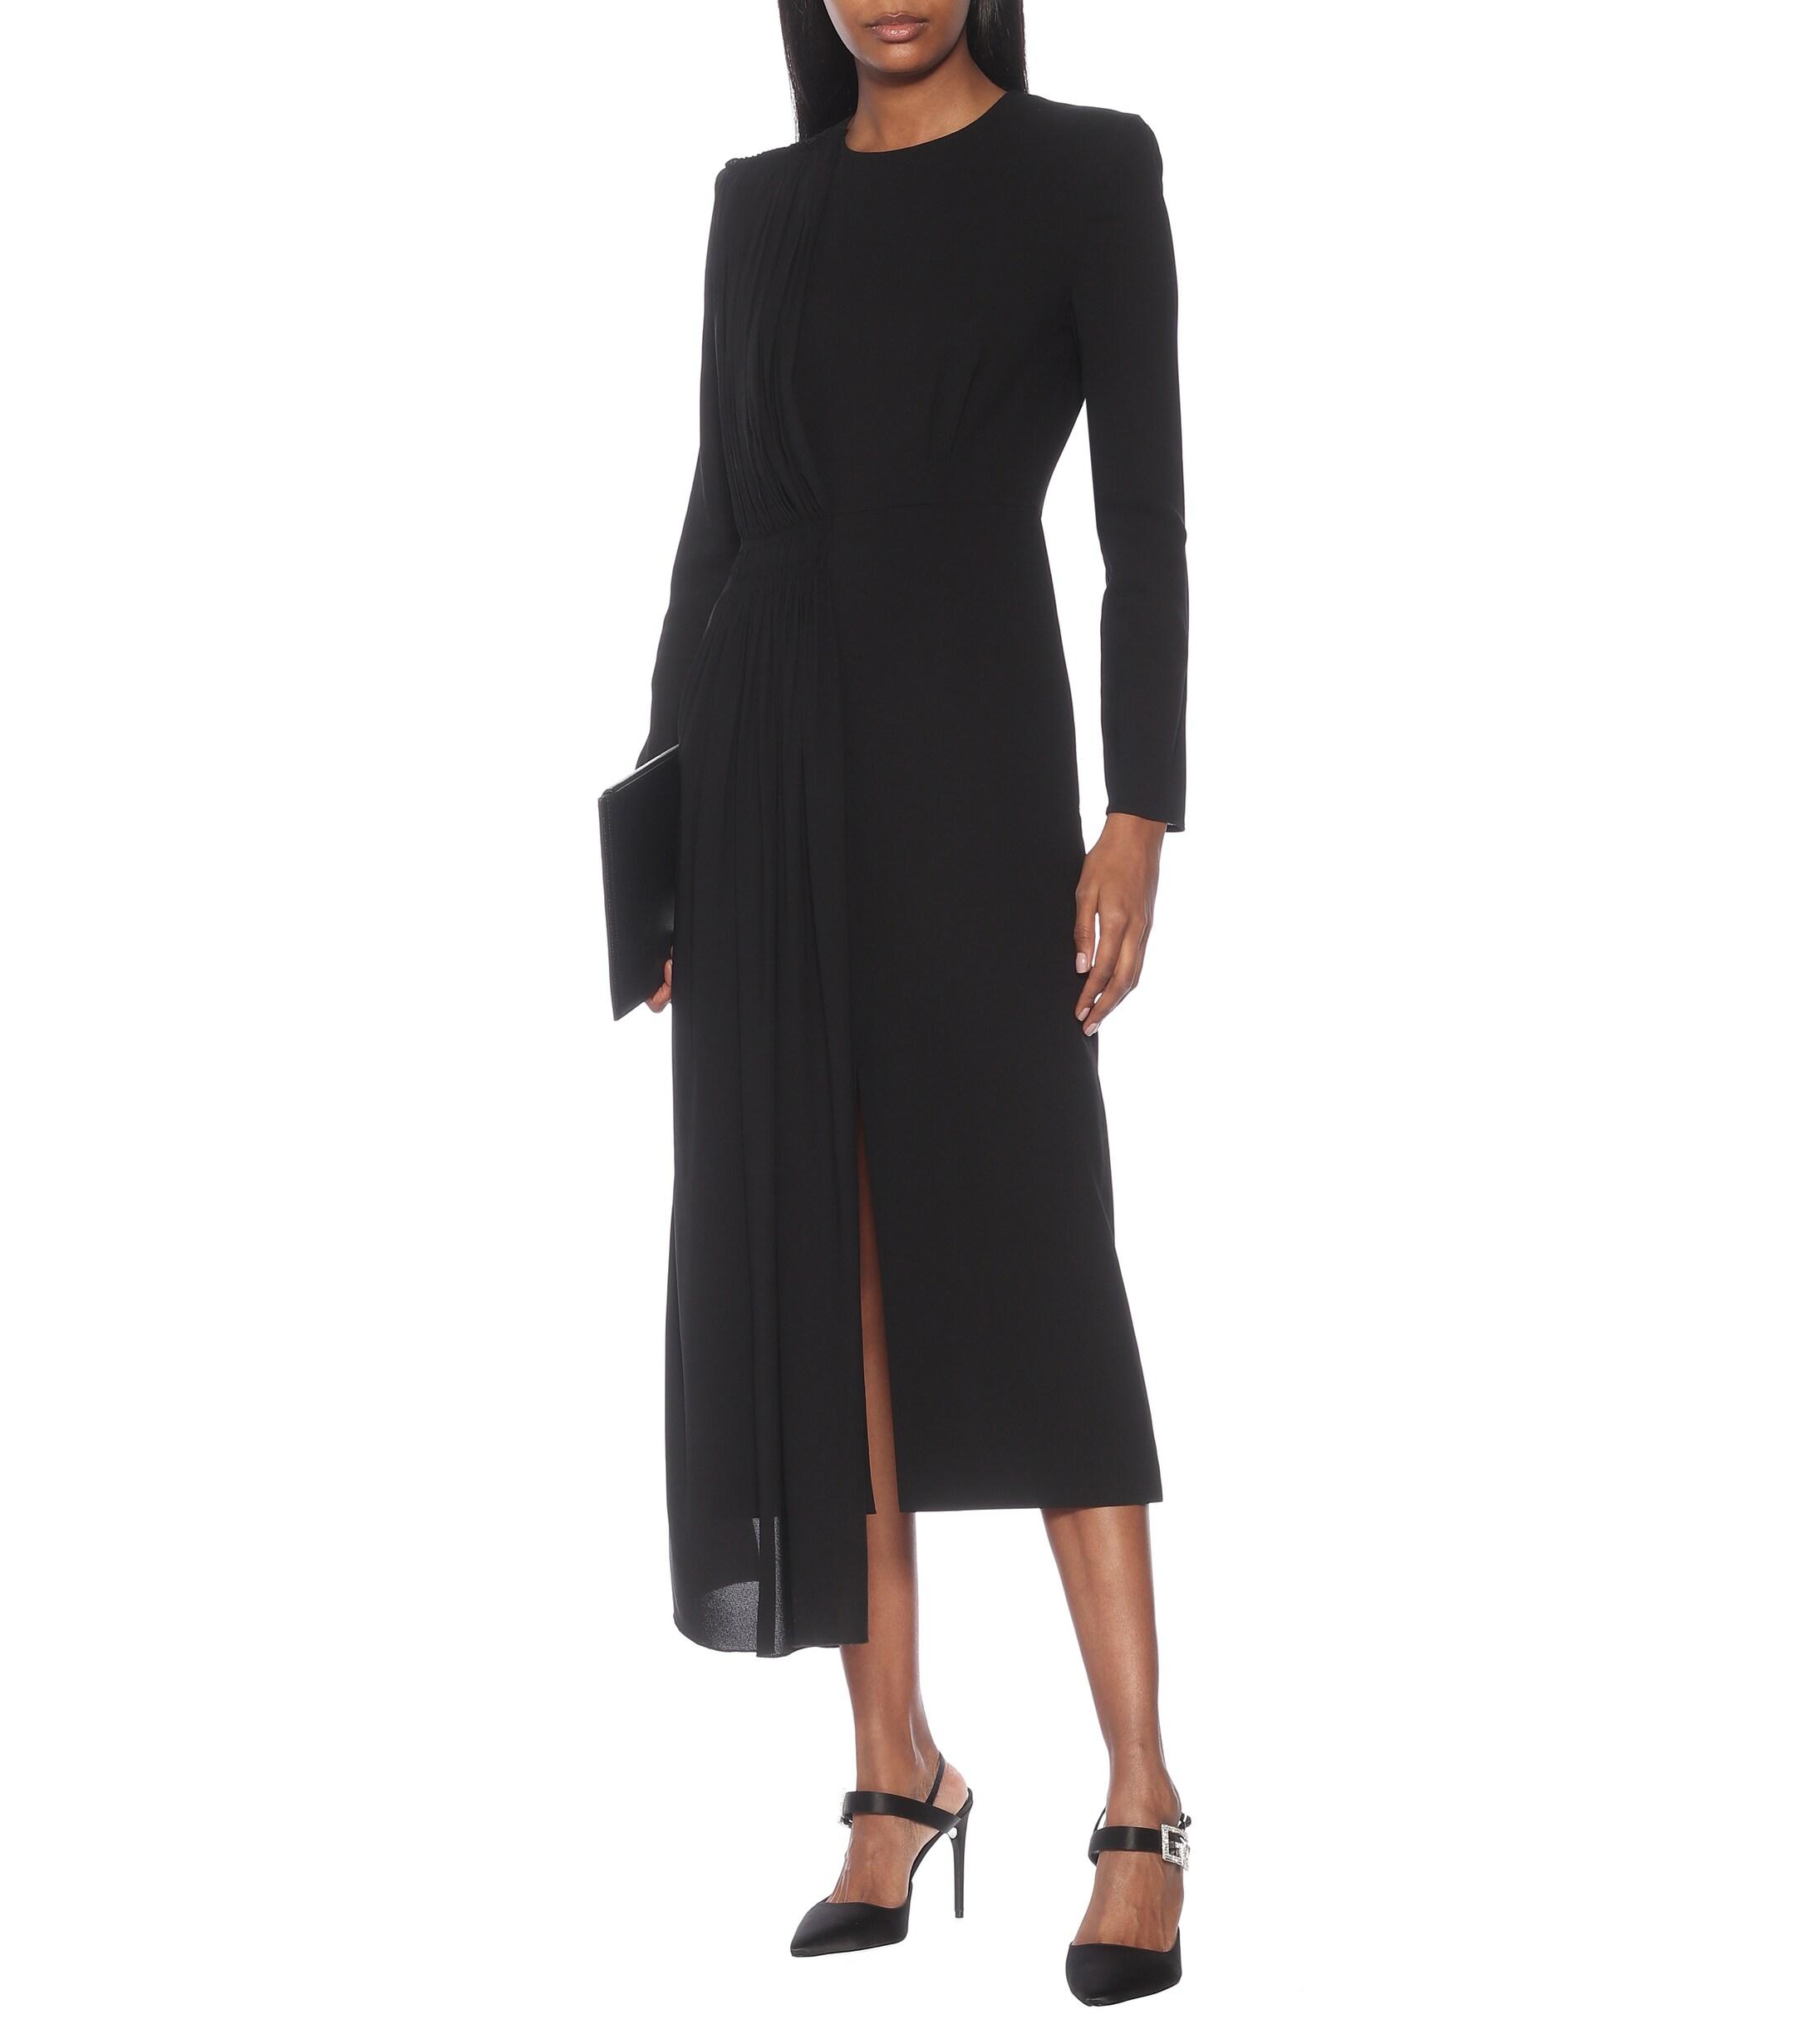 Givenchy Stretch-crêpe Midi Dress in Black - Lyst